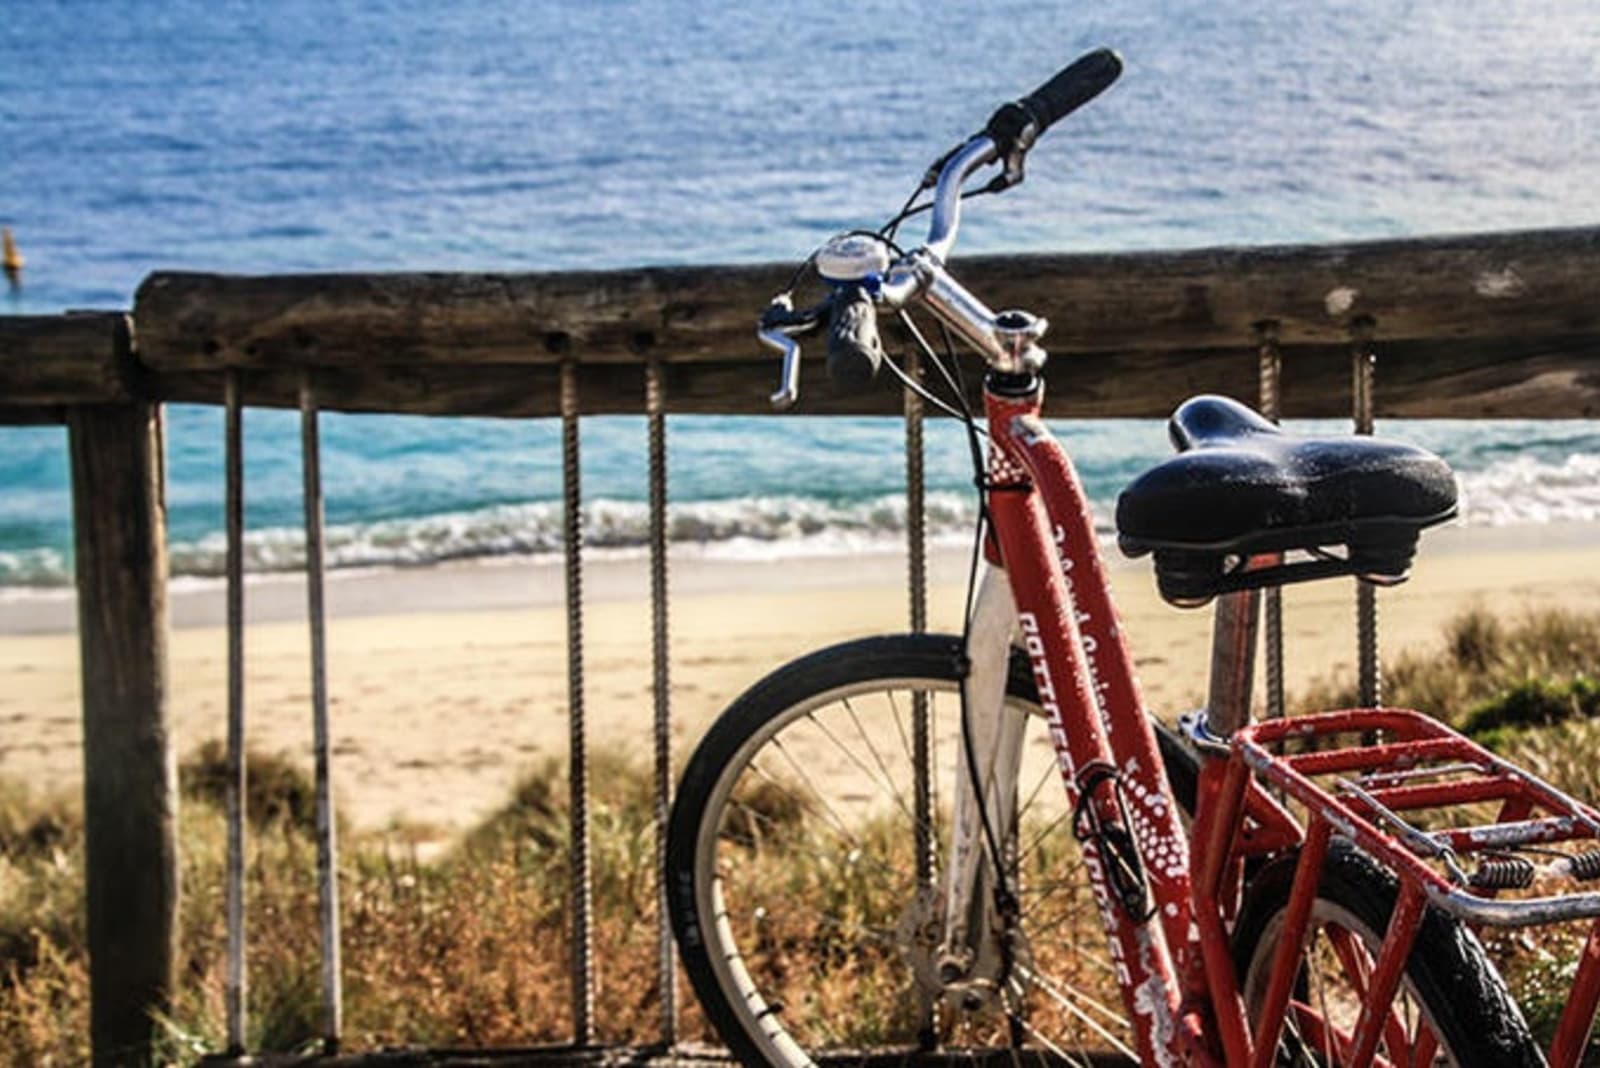 beaches-and-bikes-richard-collett.jpeg